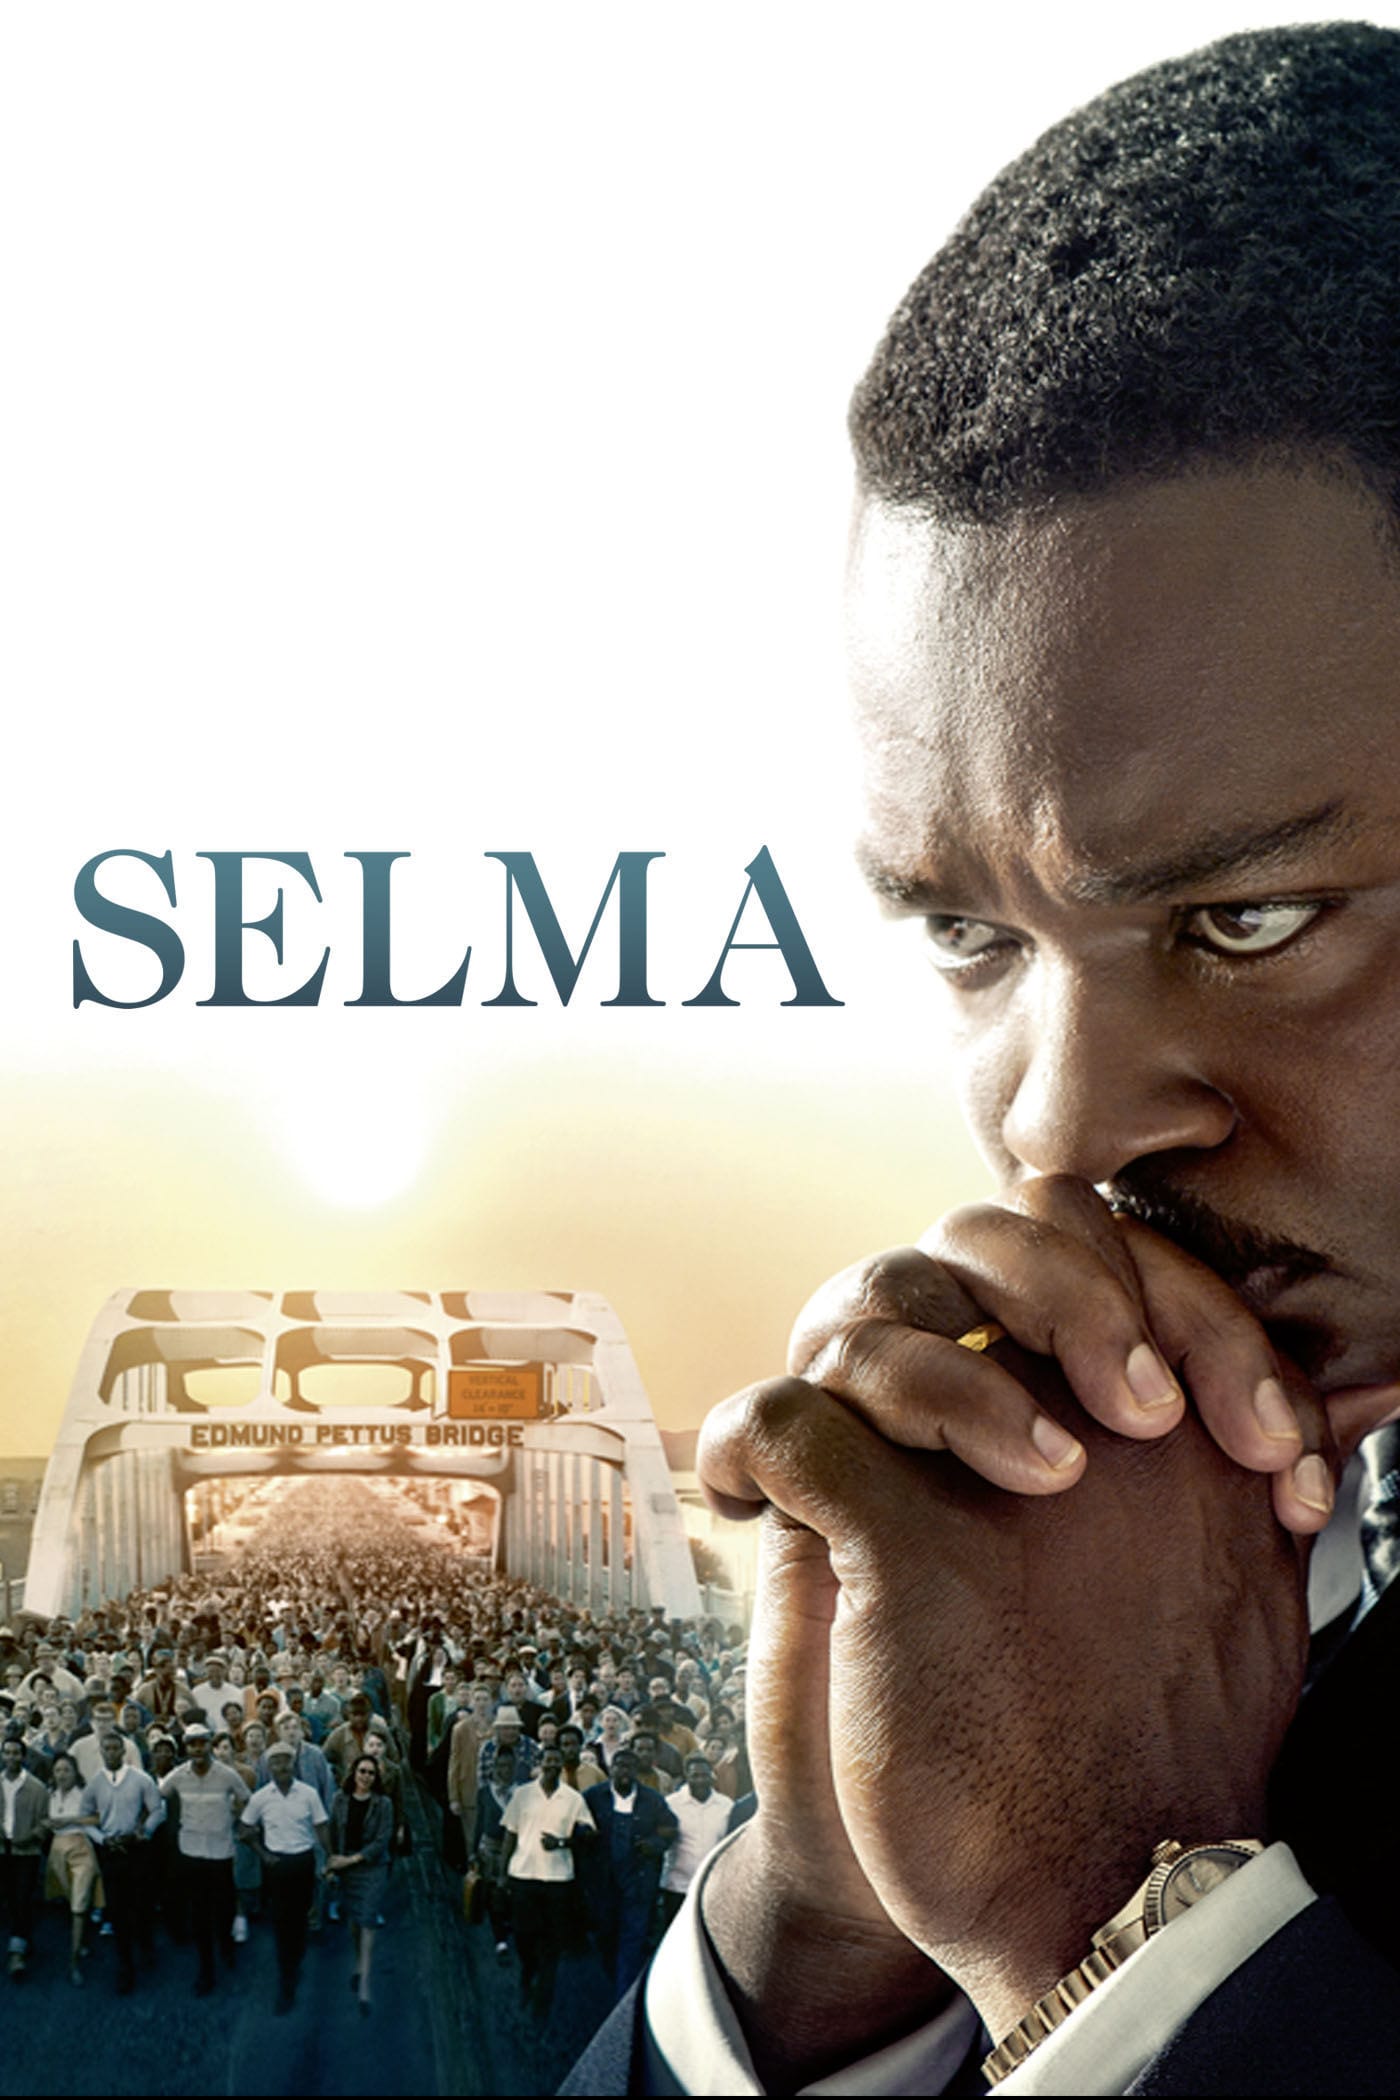 Plakat von "Selma"